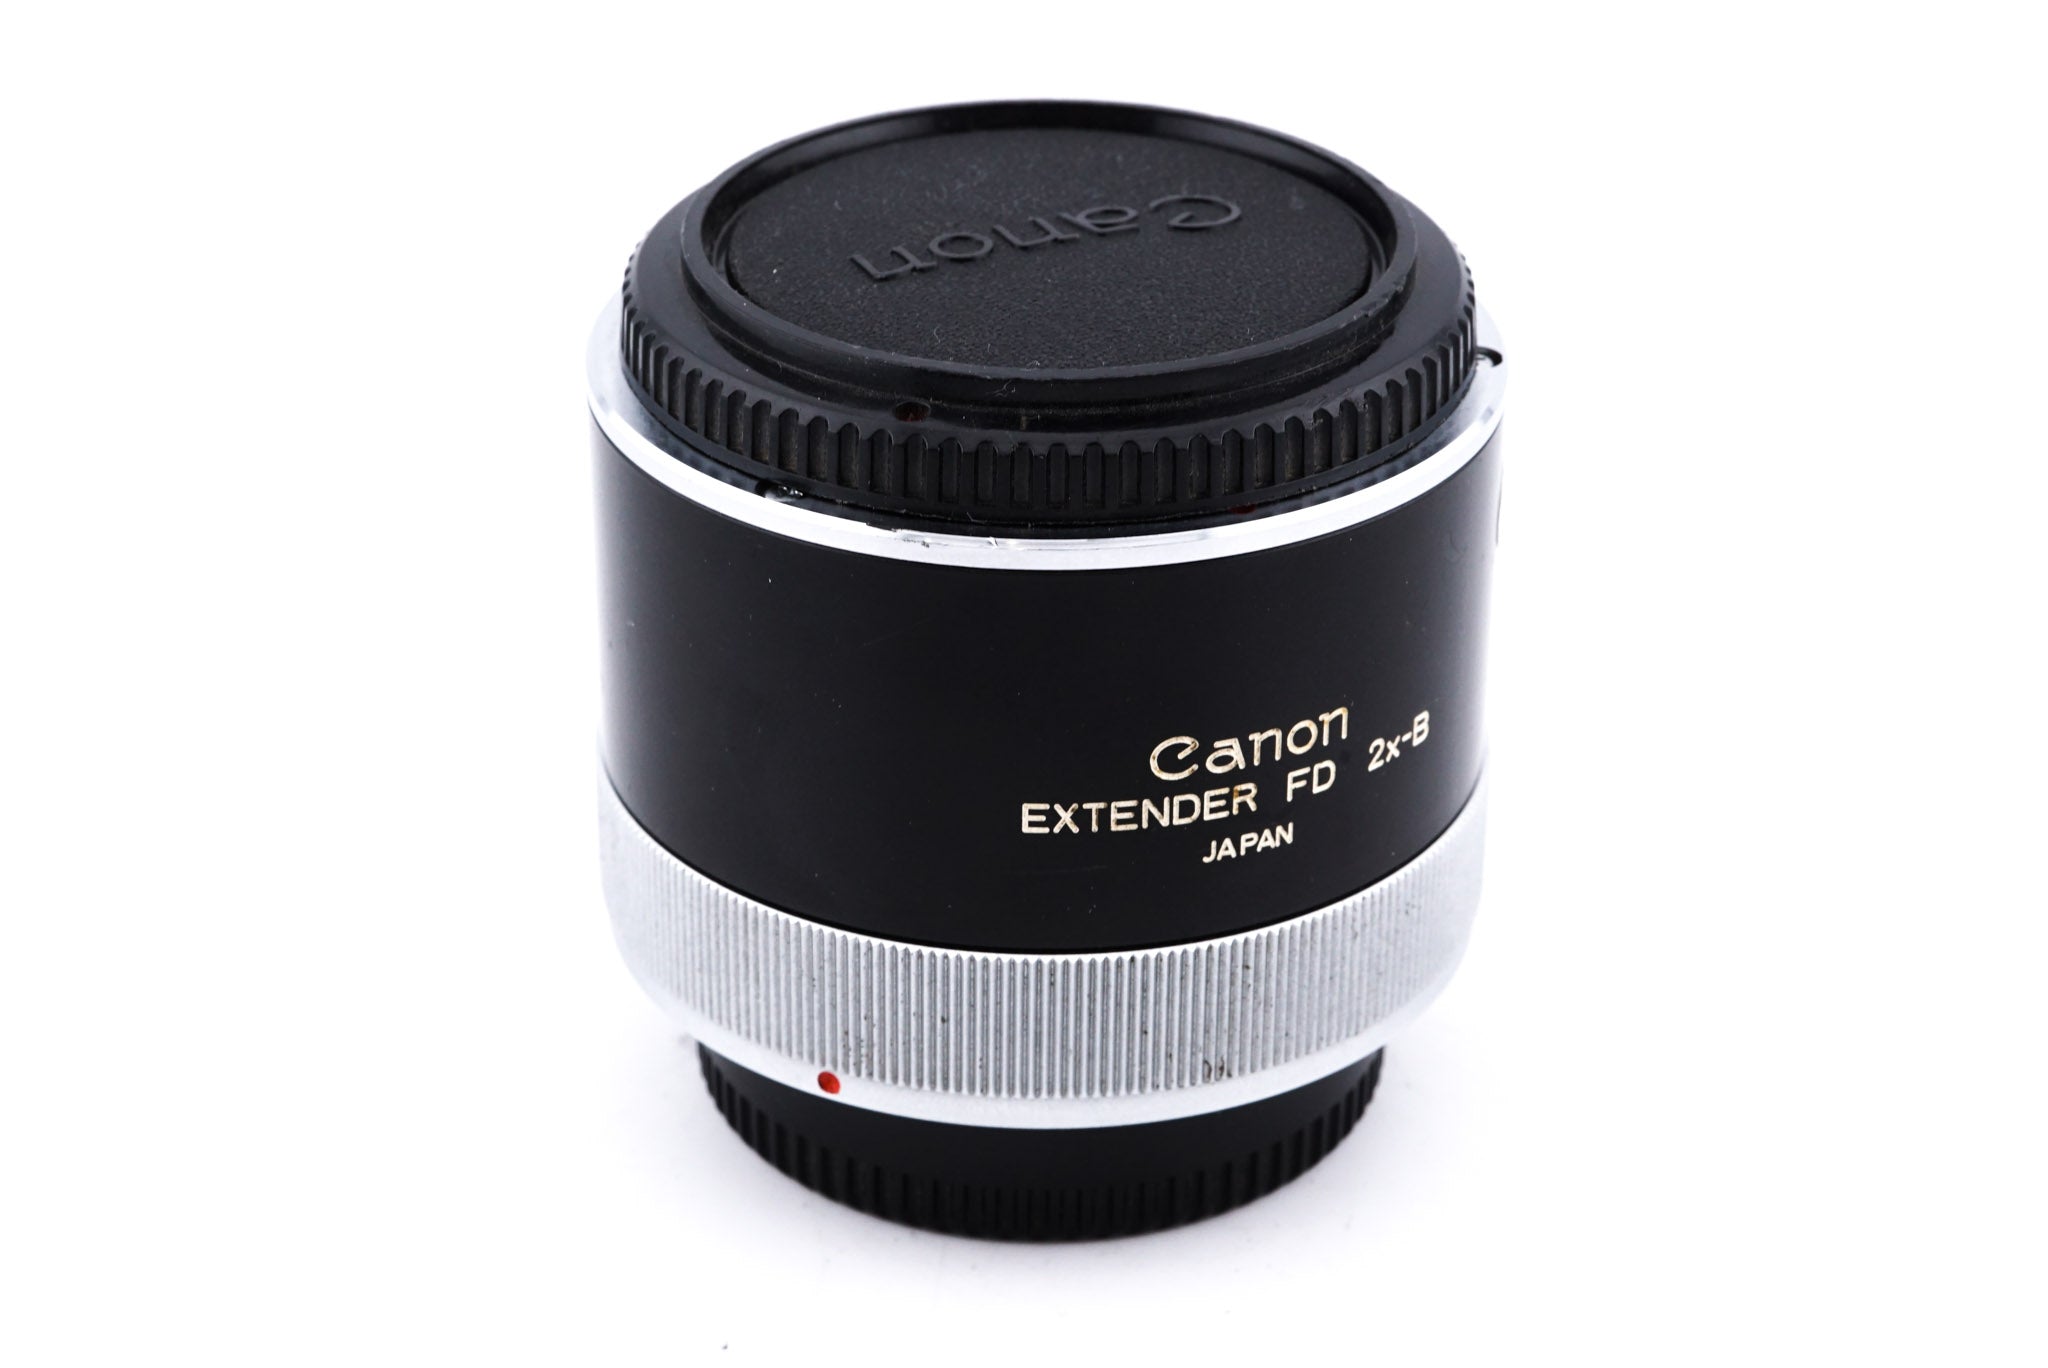 Canon 2X-B Extender FD - Accessory